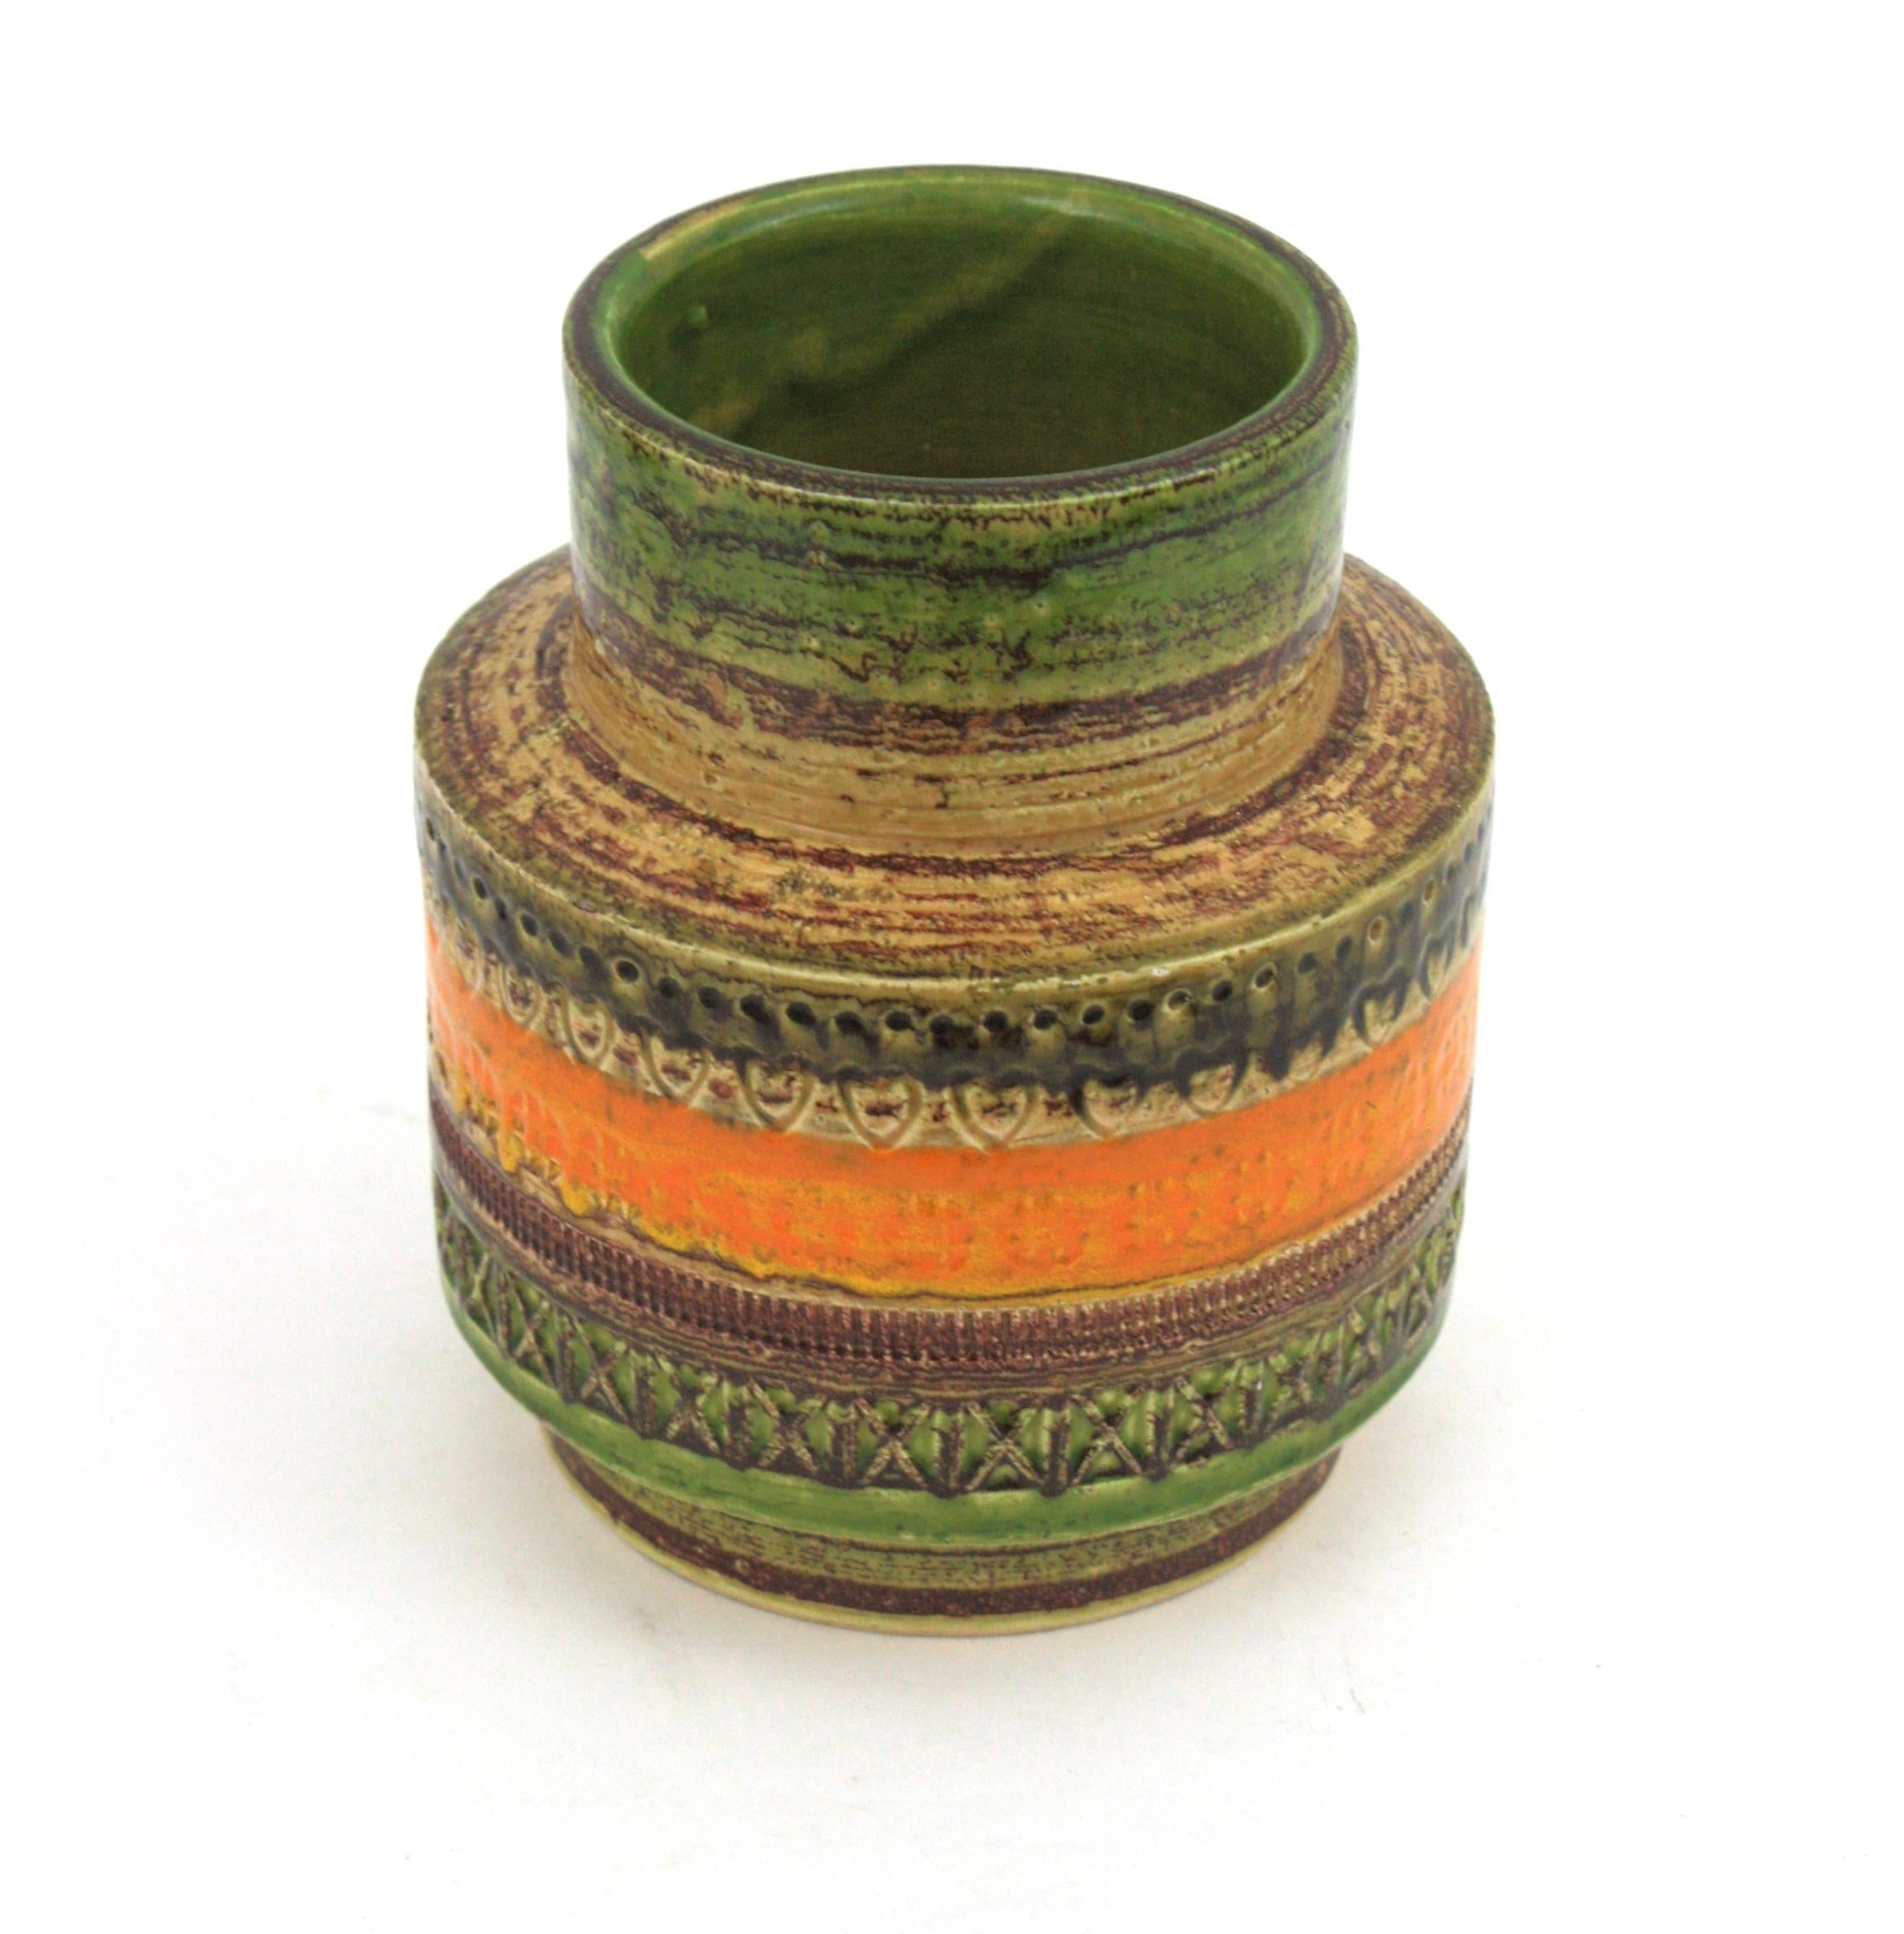 Bitossi Sahara Aldo Londi Cer Paoli glasierte Keramikvasen, Italien, 1960er Jahre (20. Jahrhundert) im Angebot